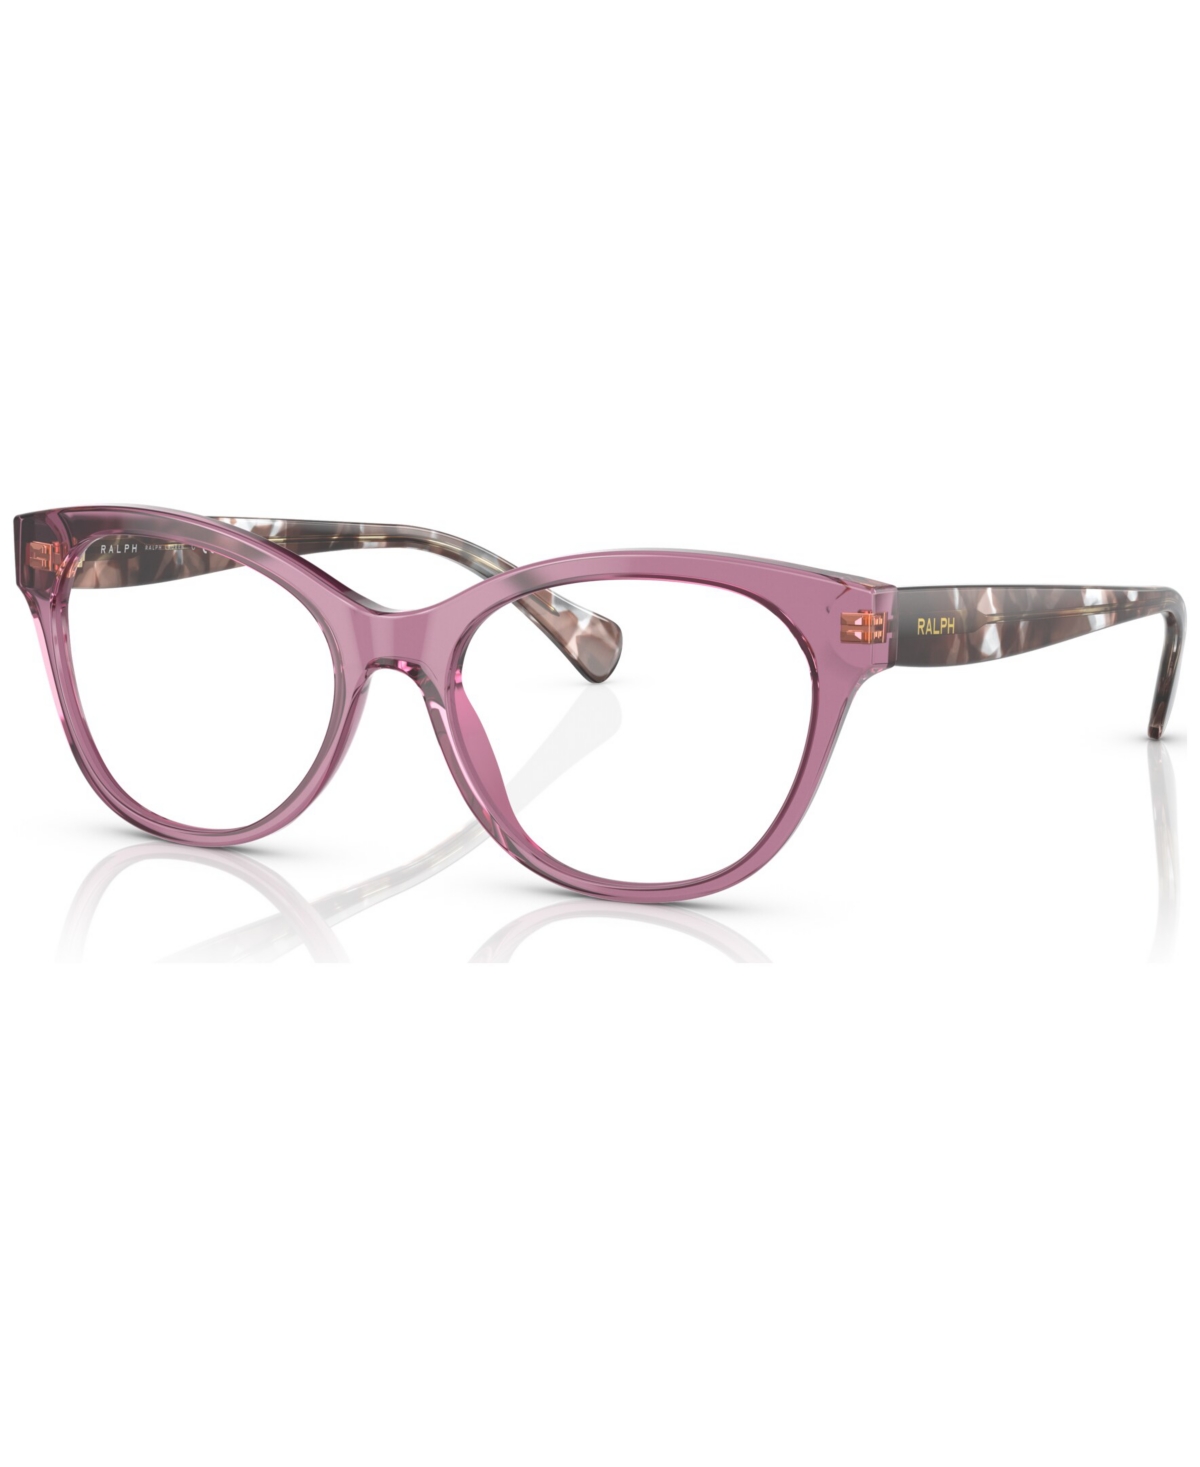 Women's Cat Eye Eyeglasses, RA714152-o - Shiny Transparent Violet